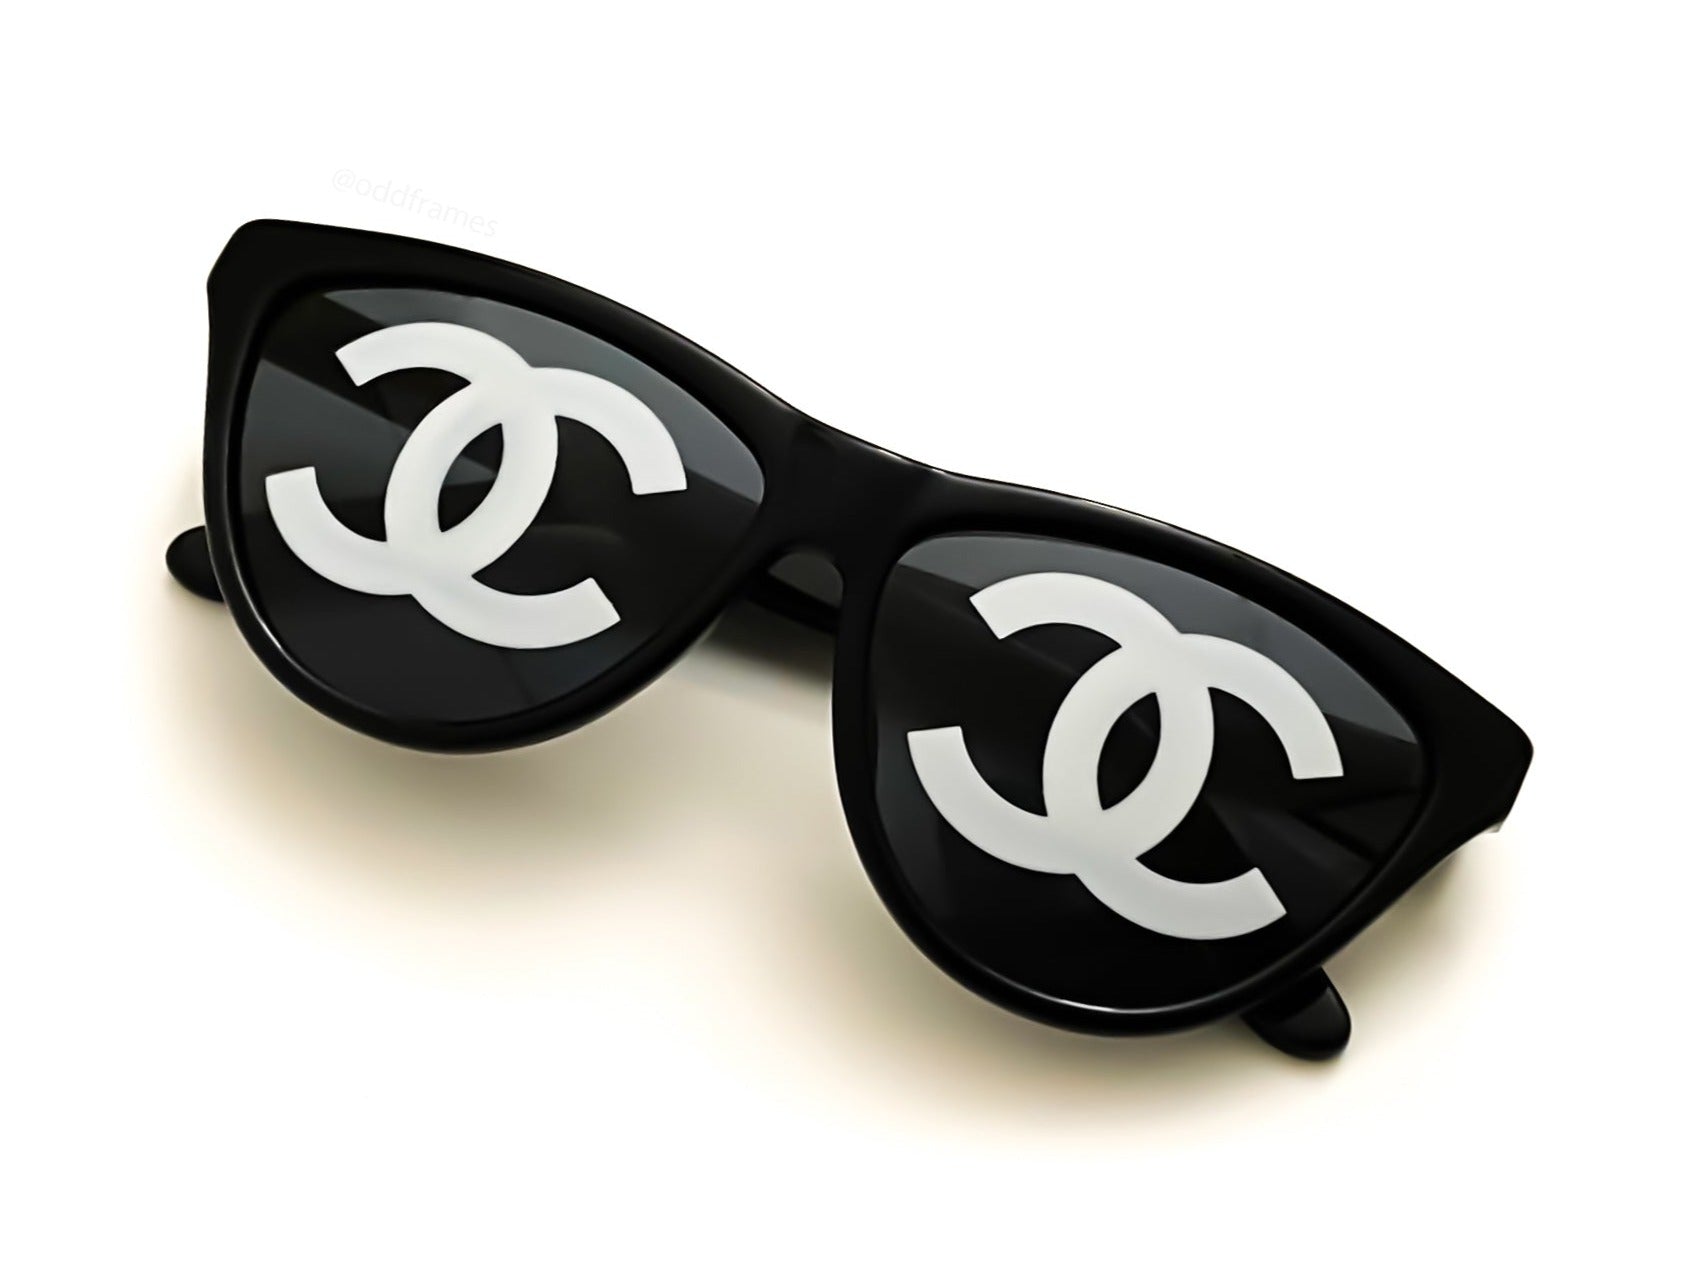 Chanel CC 1993 Round Sunglasses